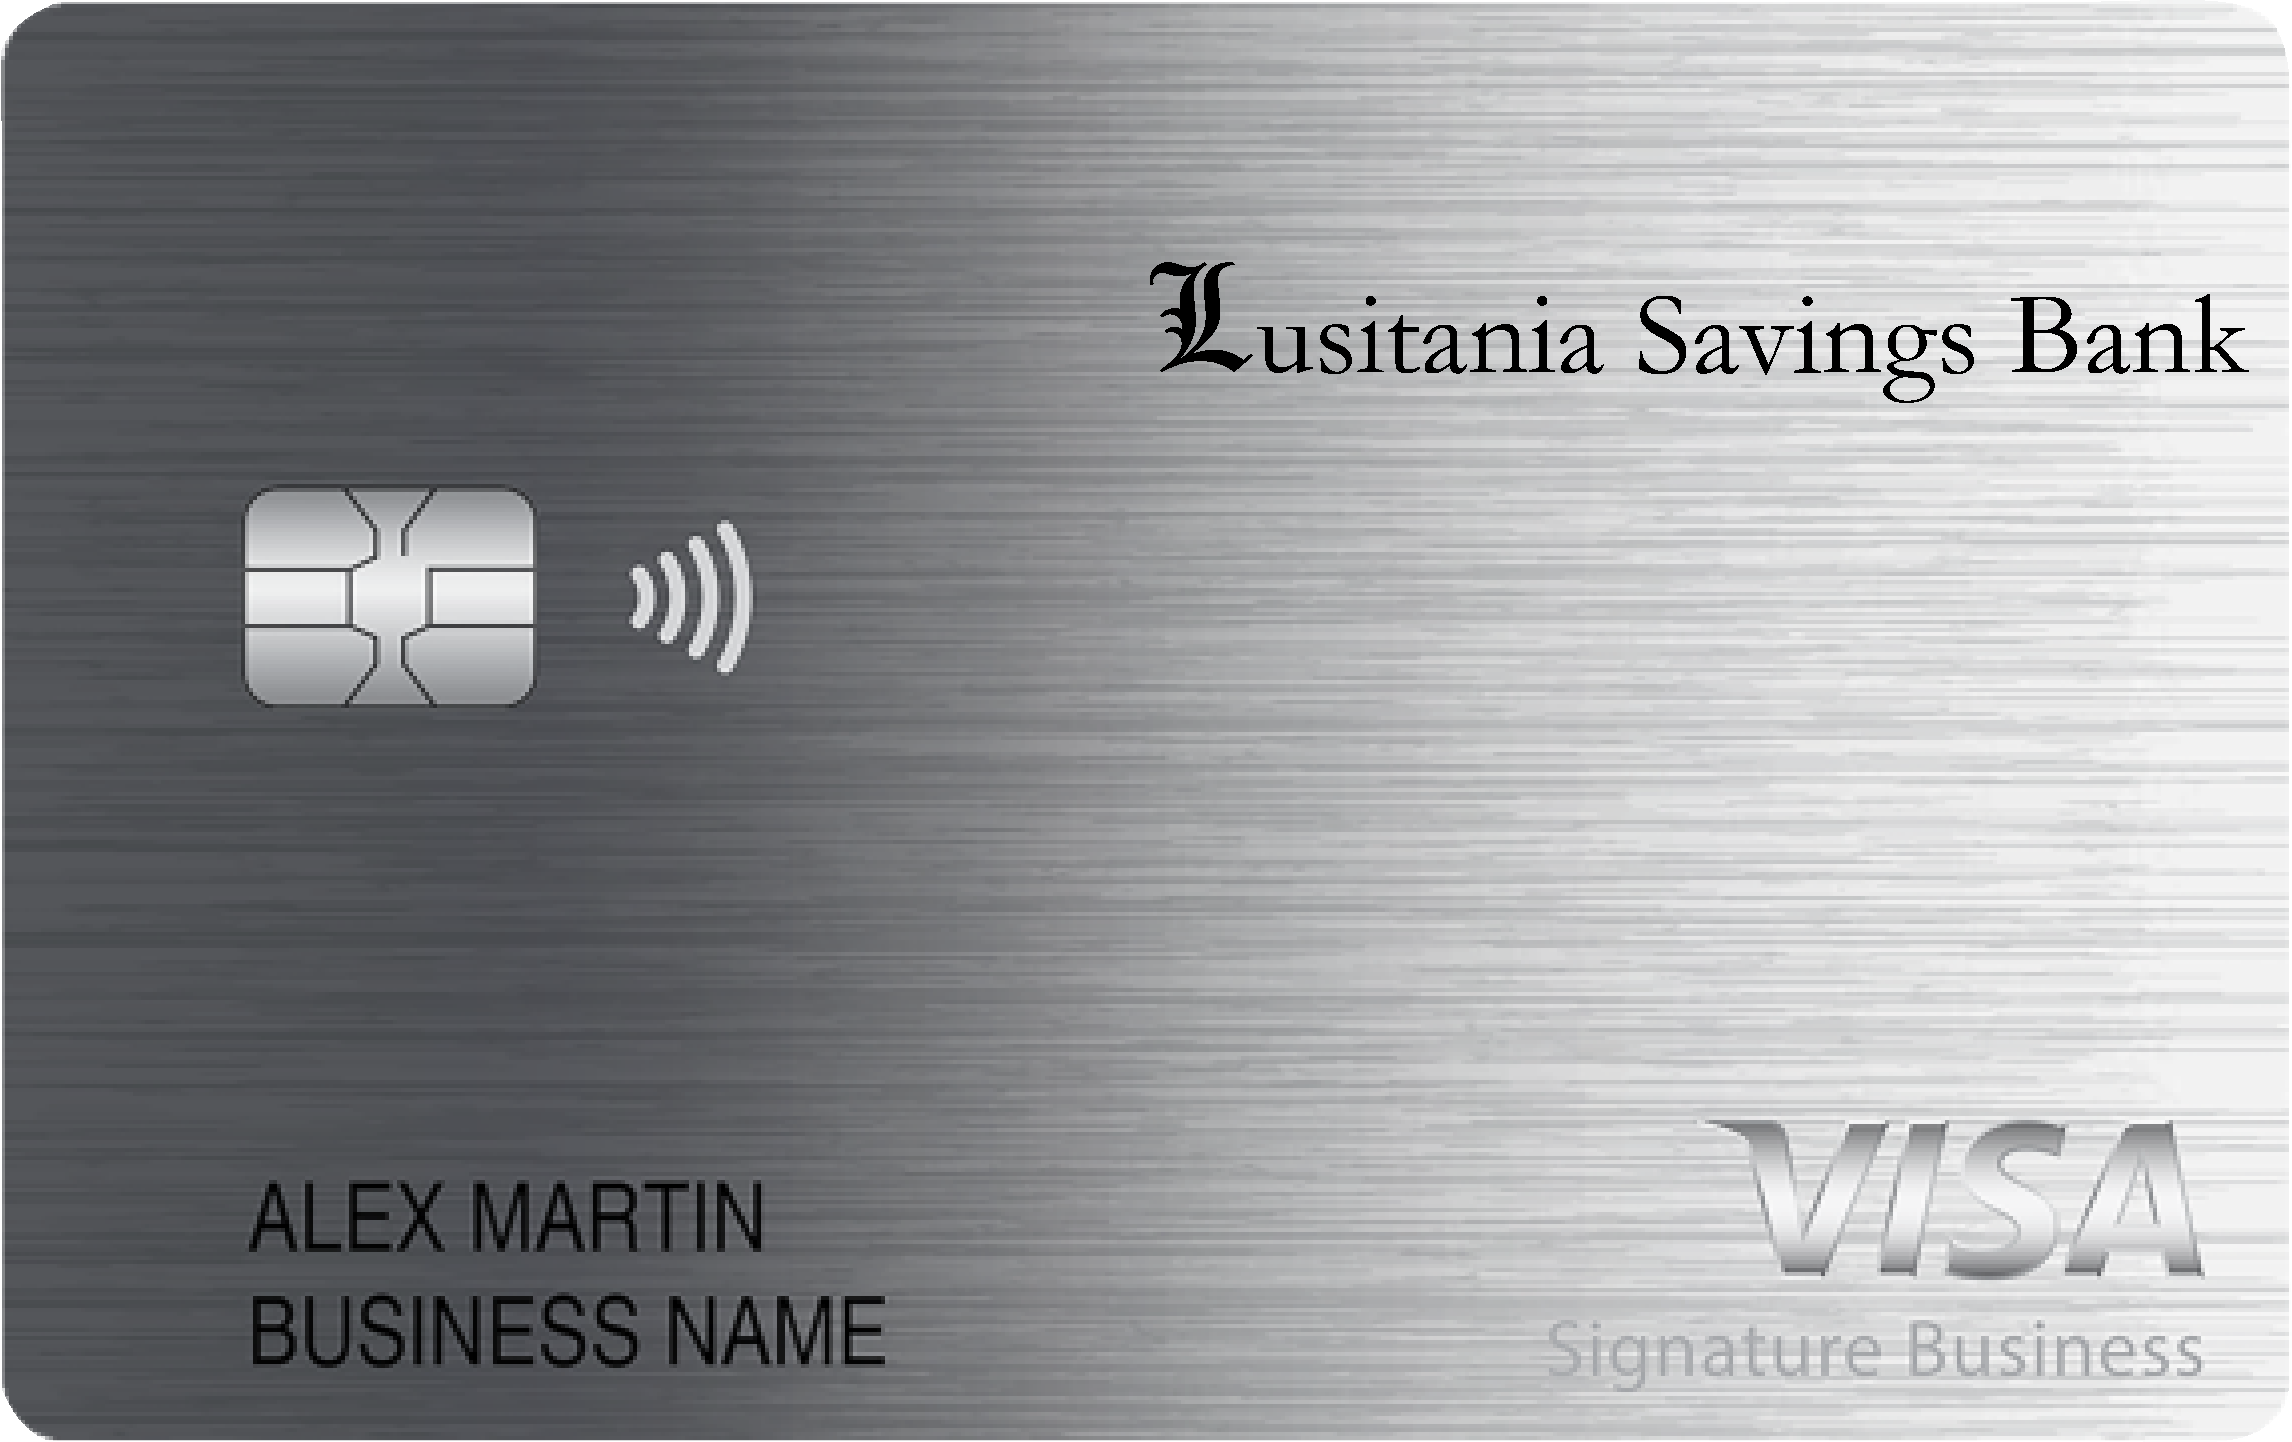 Lusitania Savings Bank Smart Business Rewards Card